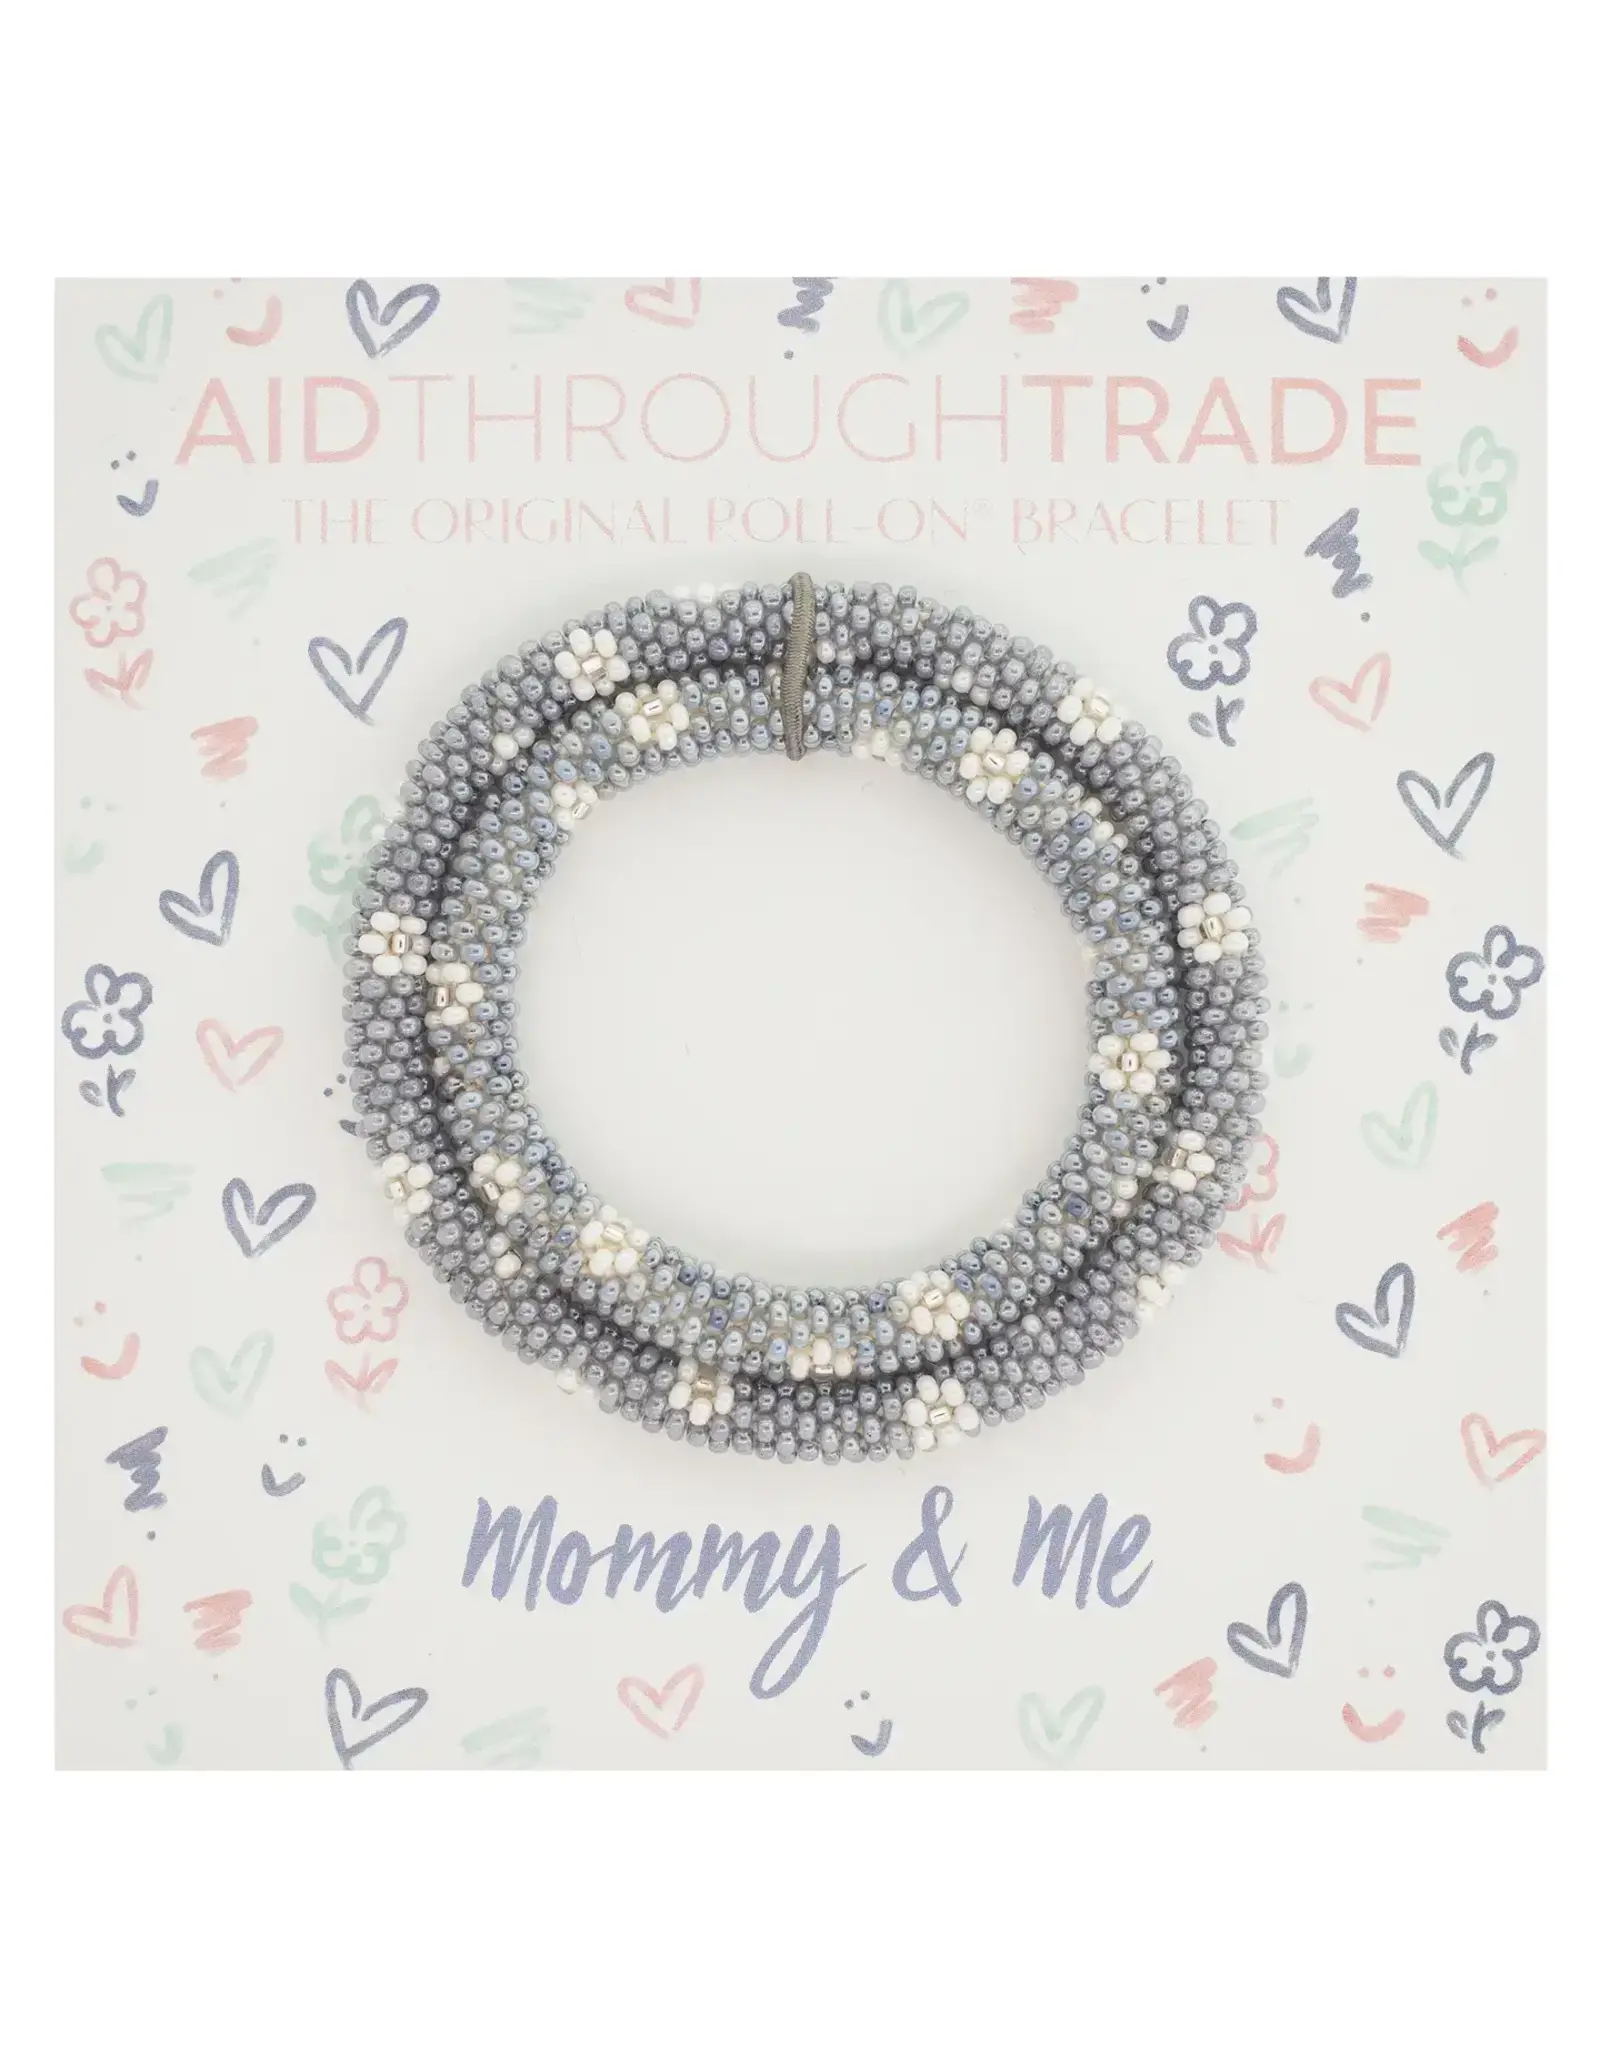 Aid Through Trade/Faire Mommy & Me Bracelets - Daisy - Roll-On® Bracelets